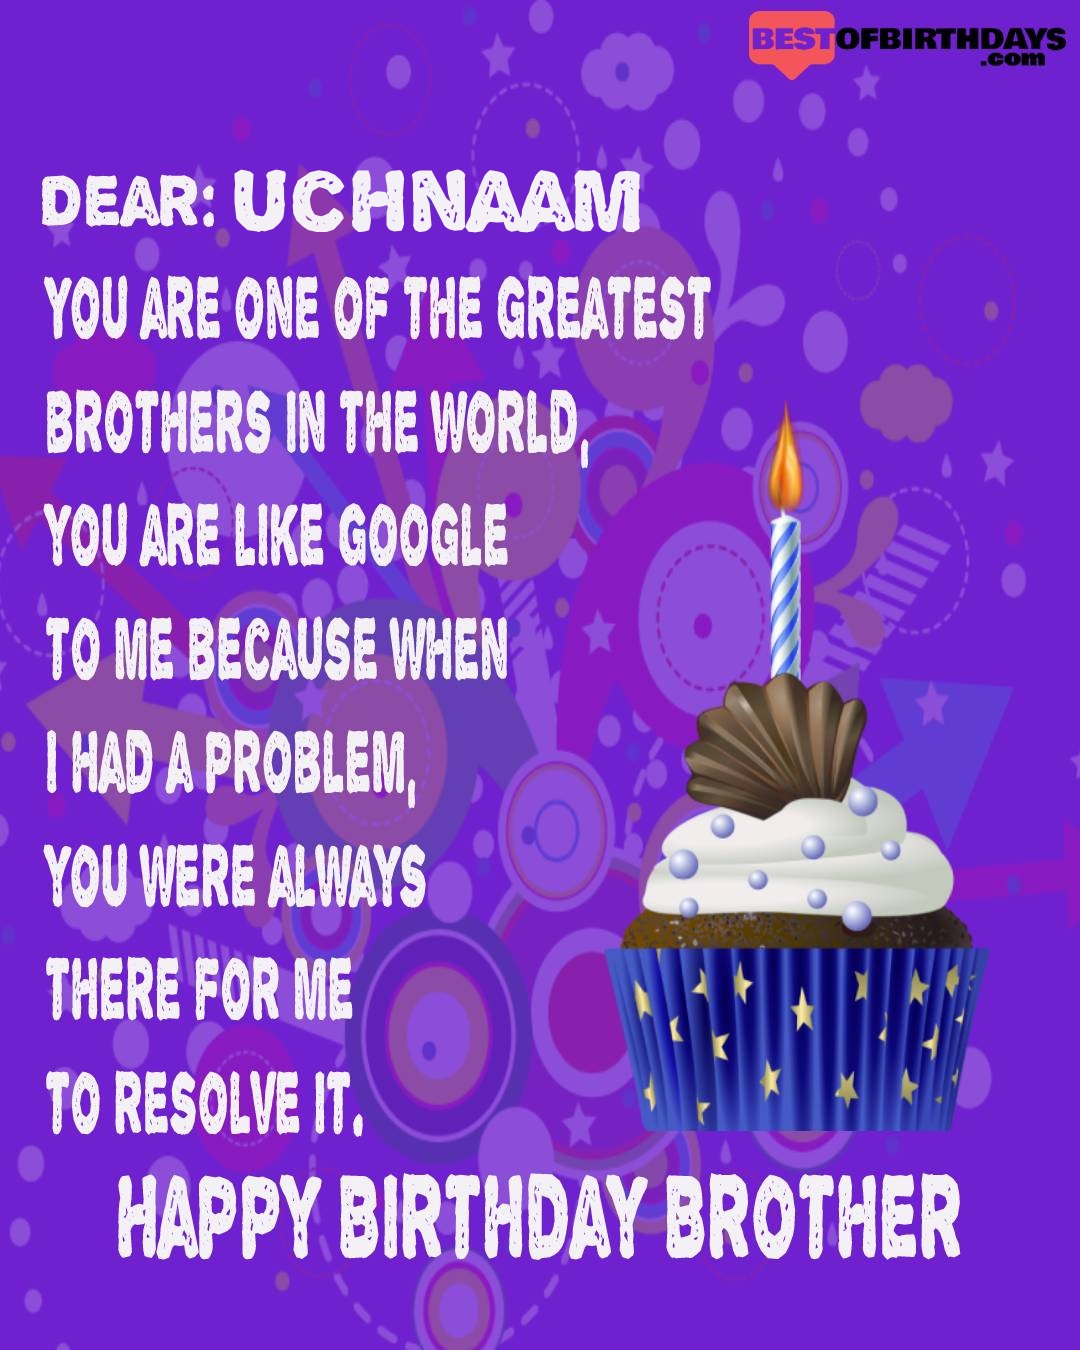 Happy birthday uchnaam bhai brother bro